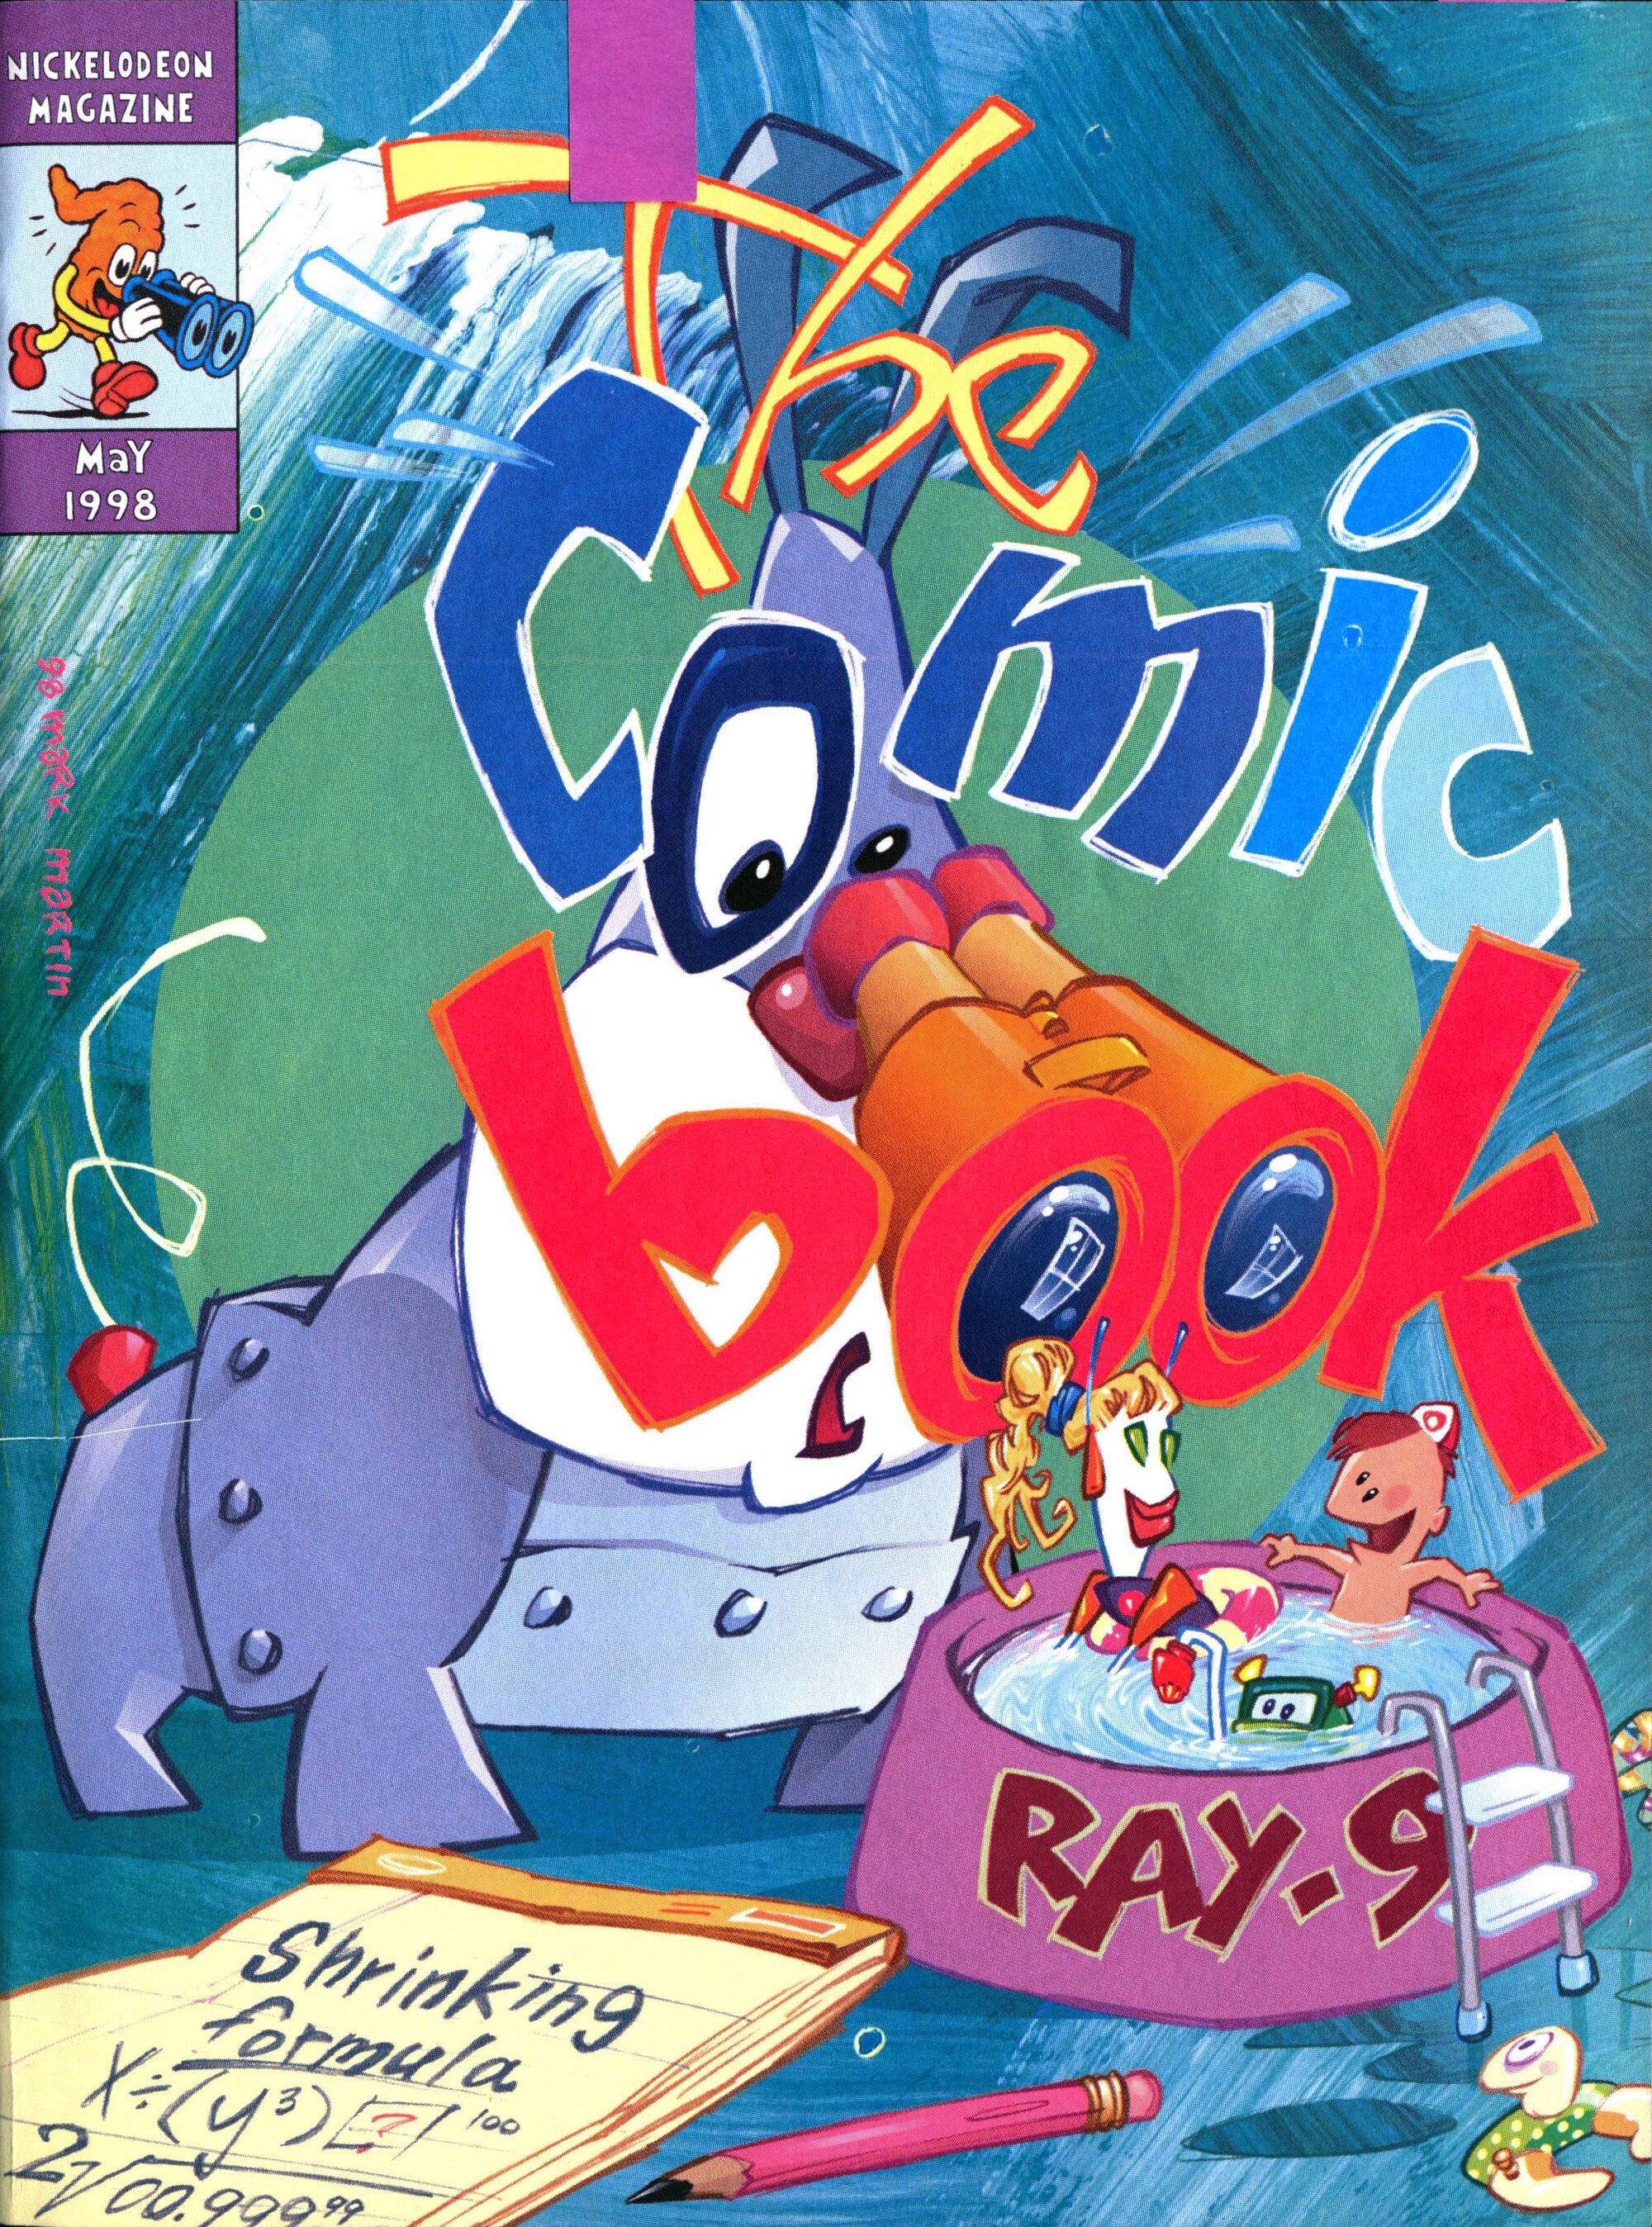 Image Nickelodeon Magazine Comic Book Cover May 1998 With Sam Hill Ray 9 Nickelodeon